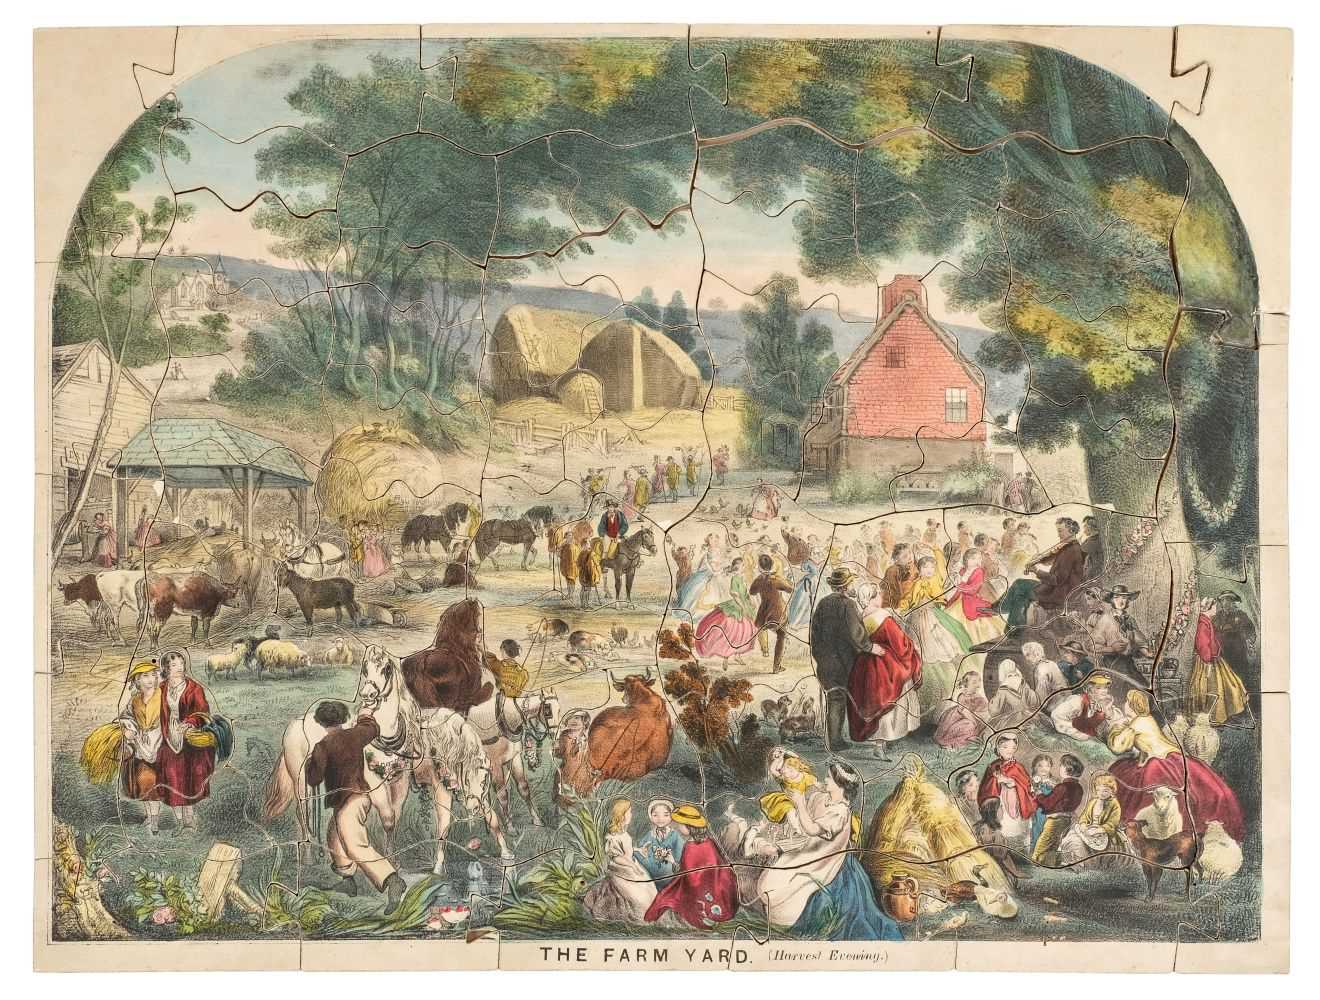 Lot 519 - Jigsaw. The Farm Yard. (Harvest Evening.), James Barfoot, circa 1860